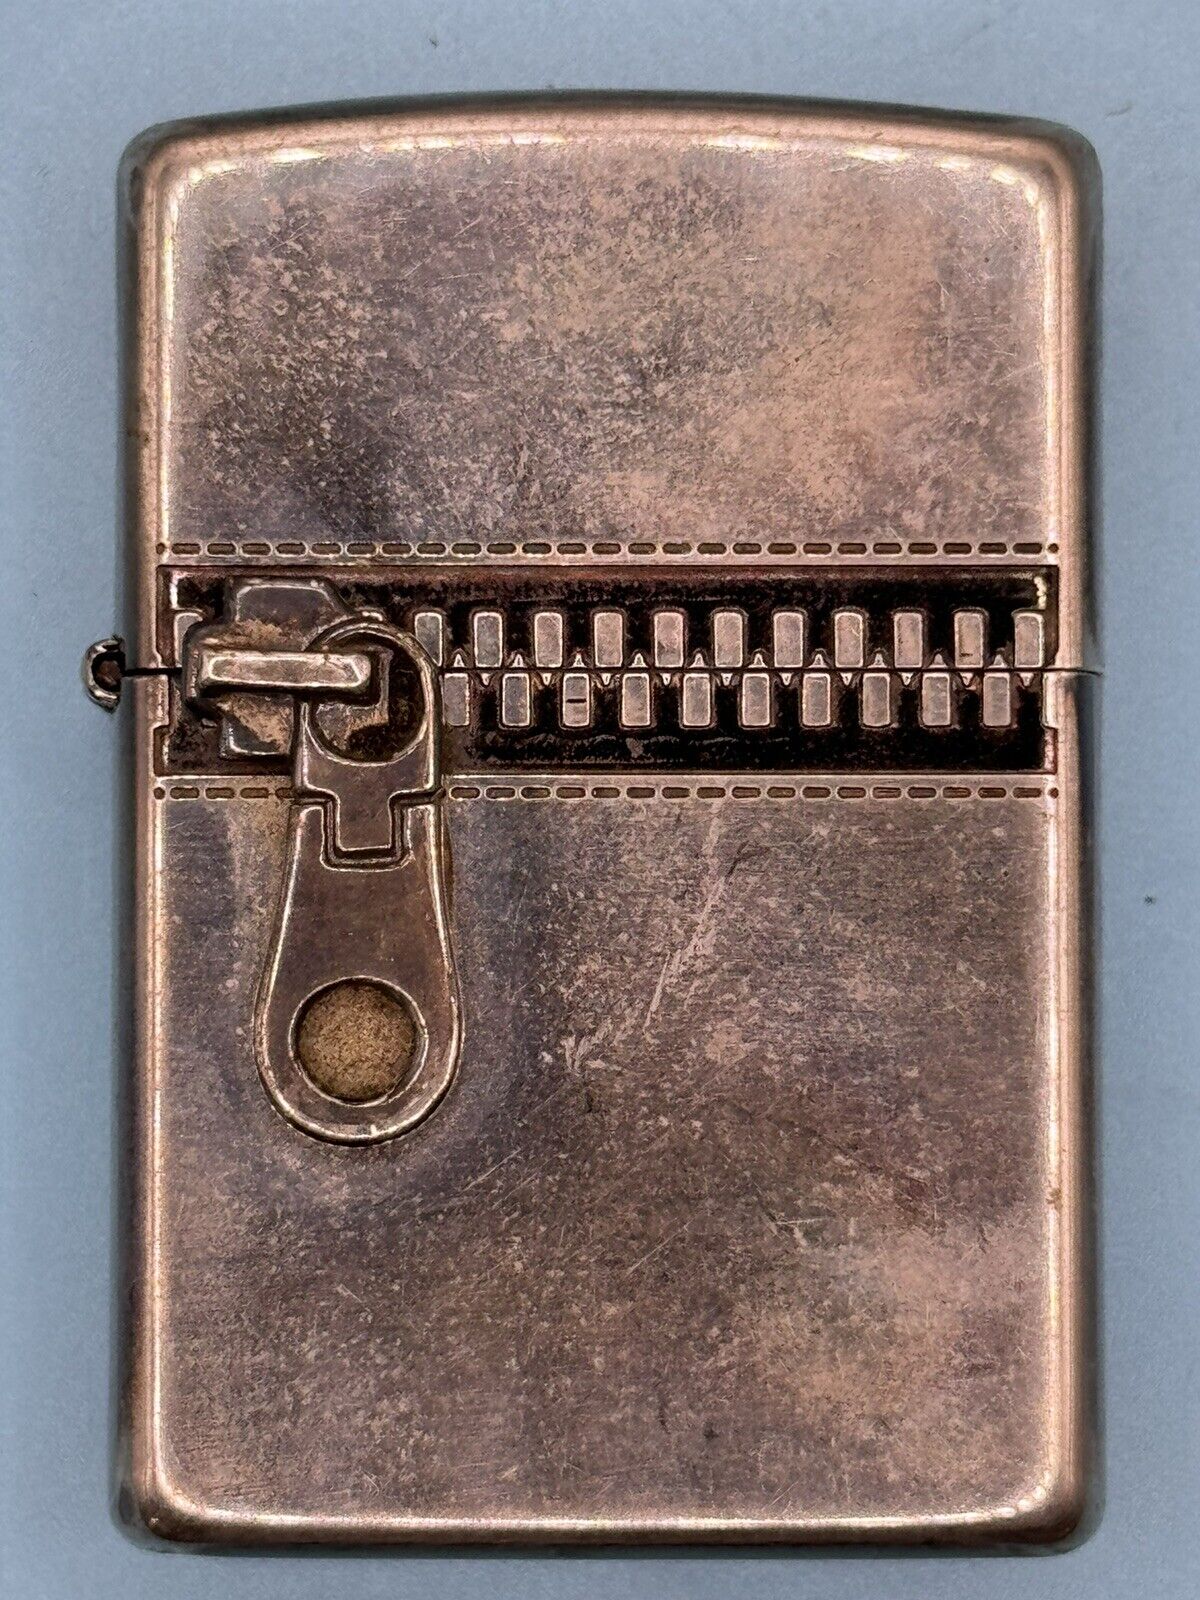 Vintage 2013 Japan Zipper Emblem Chrome Zippo Lighter